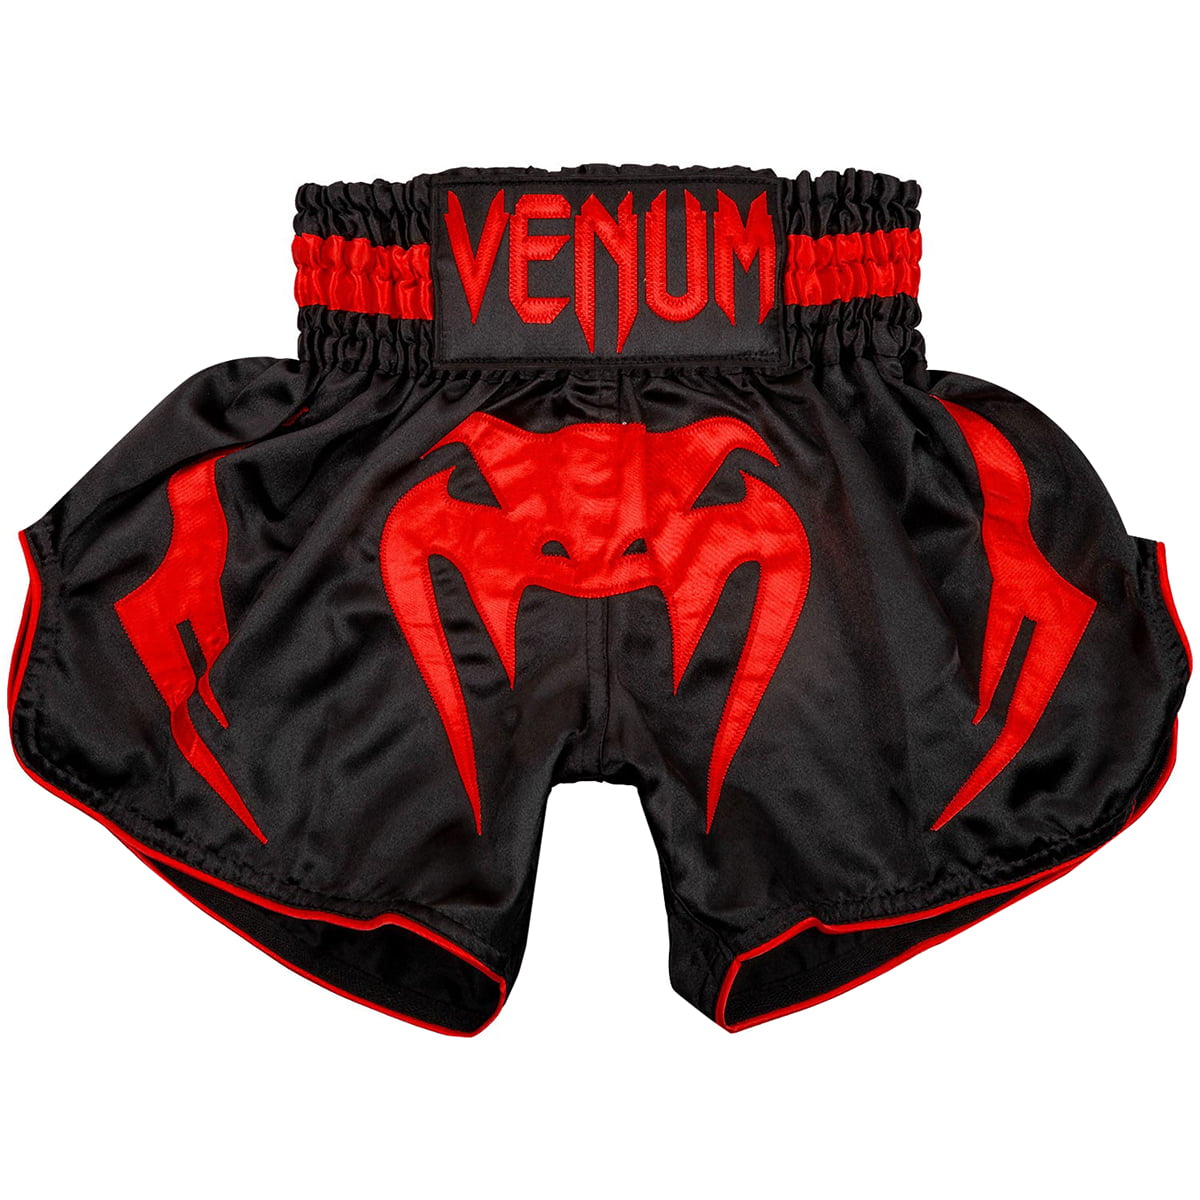 Venum Bangkok Inferno Muay Thai Shorts Mens Kickboxing Pink Orange Black White